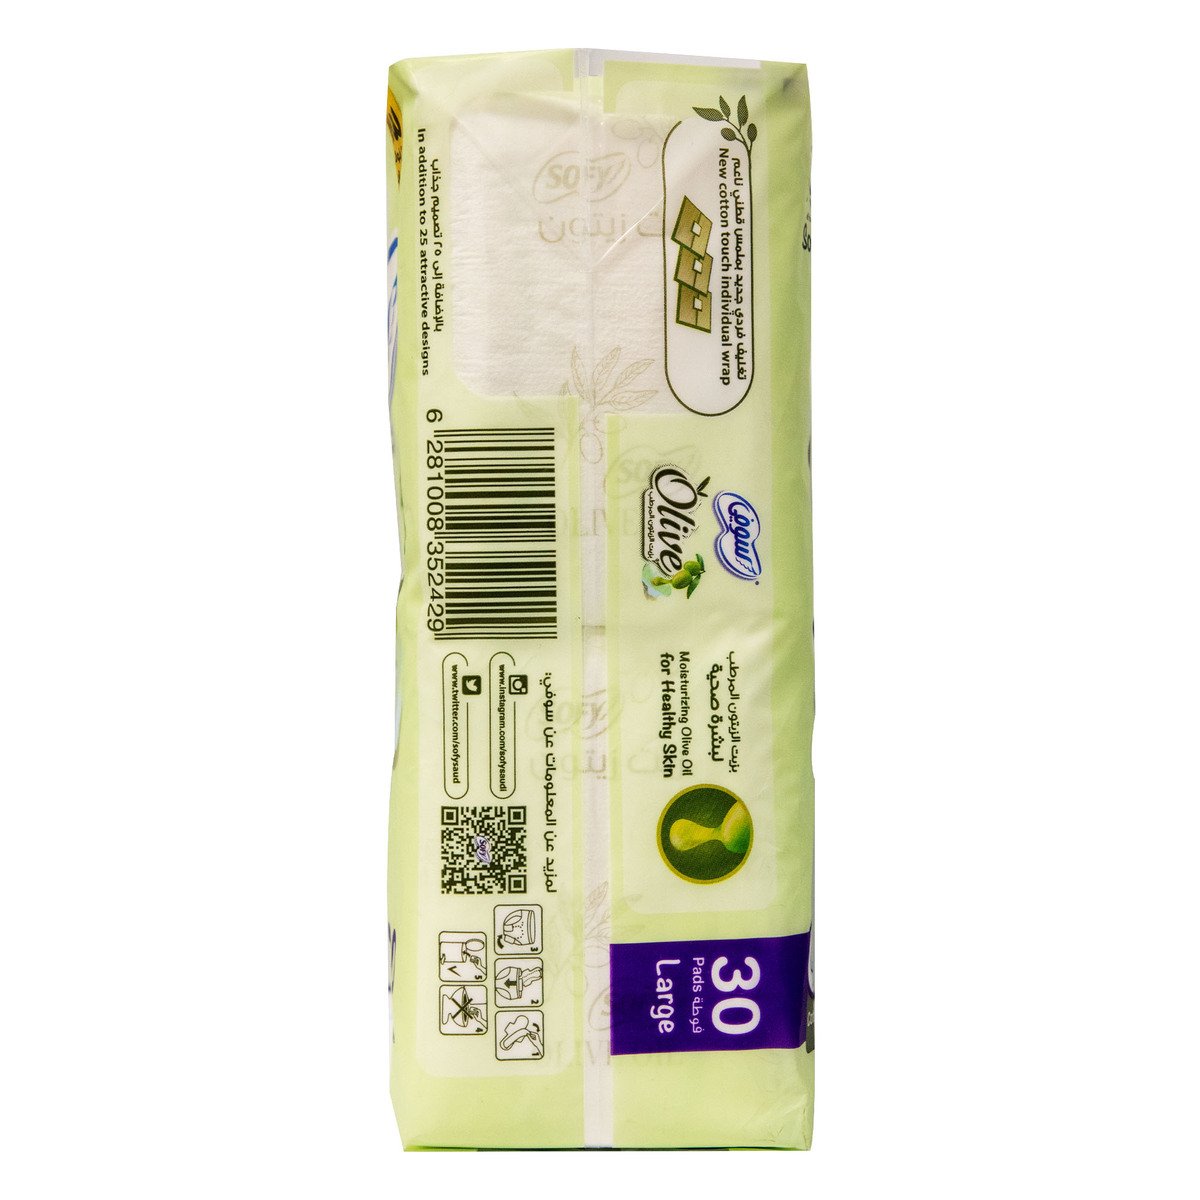 Sofy Olive Sanitary Pads Slim Large 30pcs